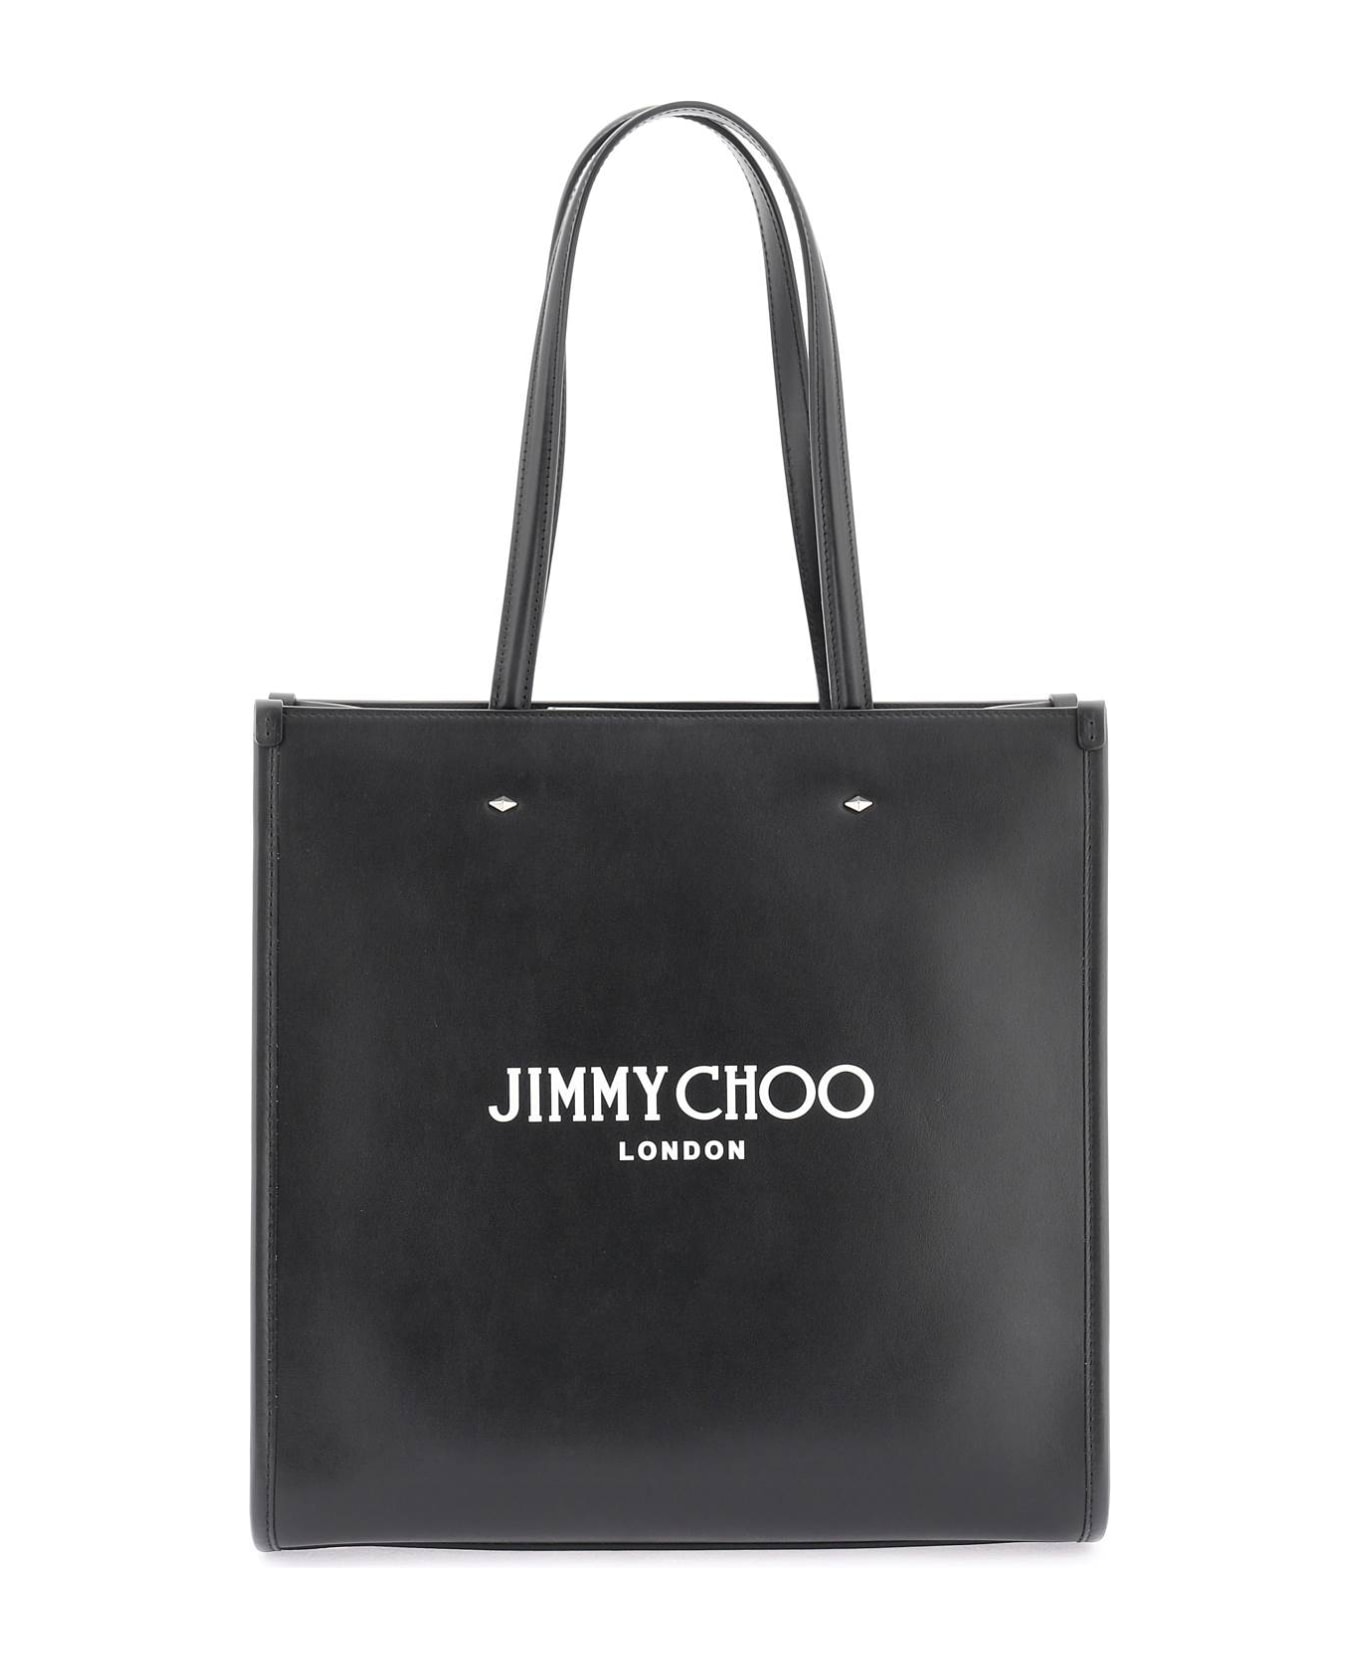 Jimmy Choo Leather Tote Bag - BLACK WHITE SILVER (Black)